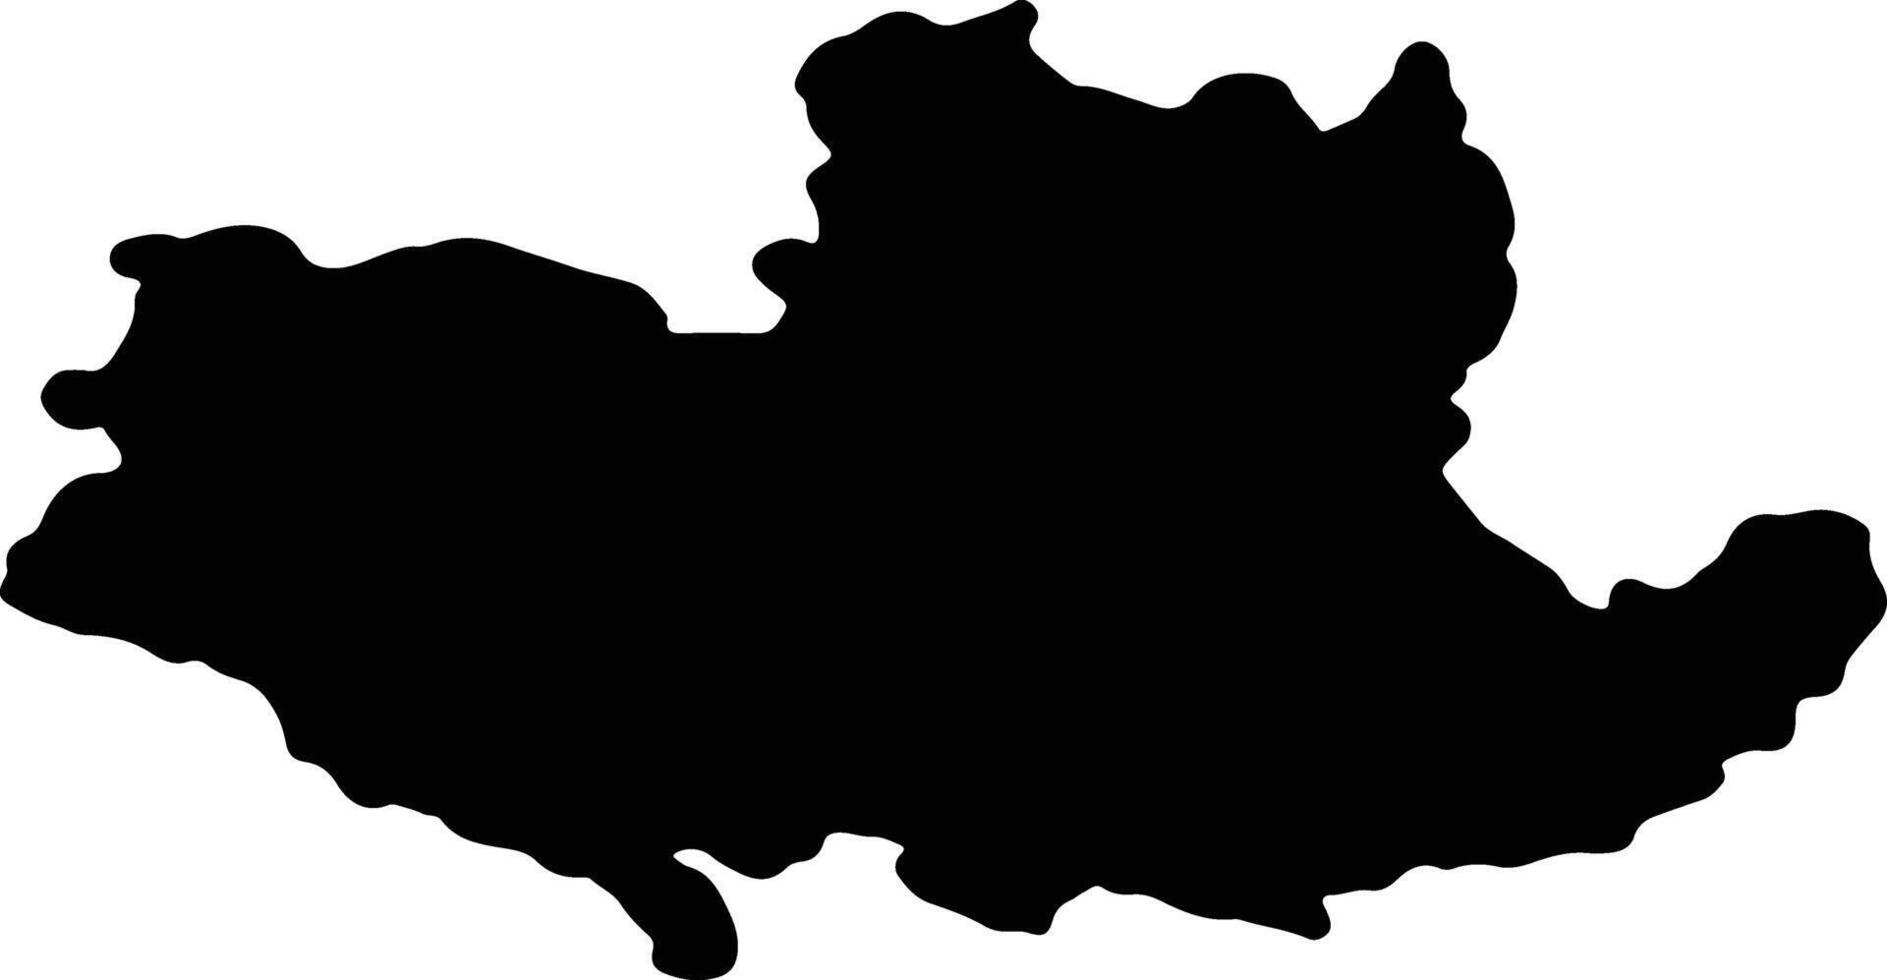 Kolubarski Republic of Serbia silhouette map vector